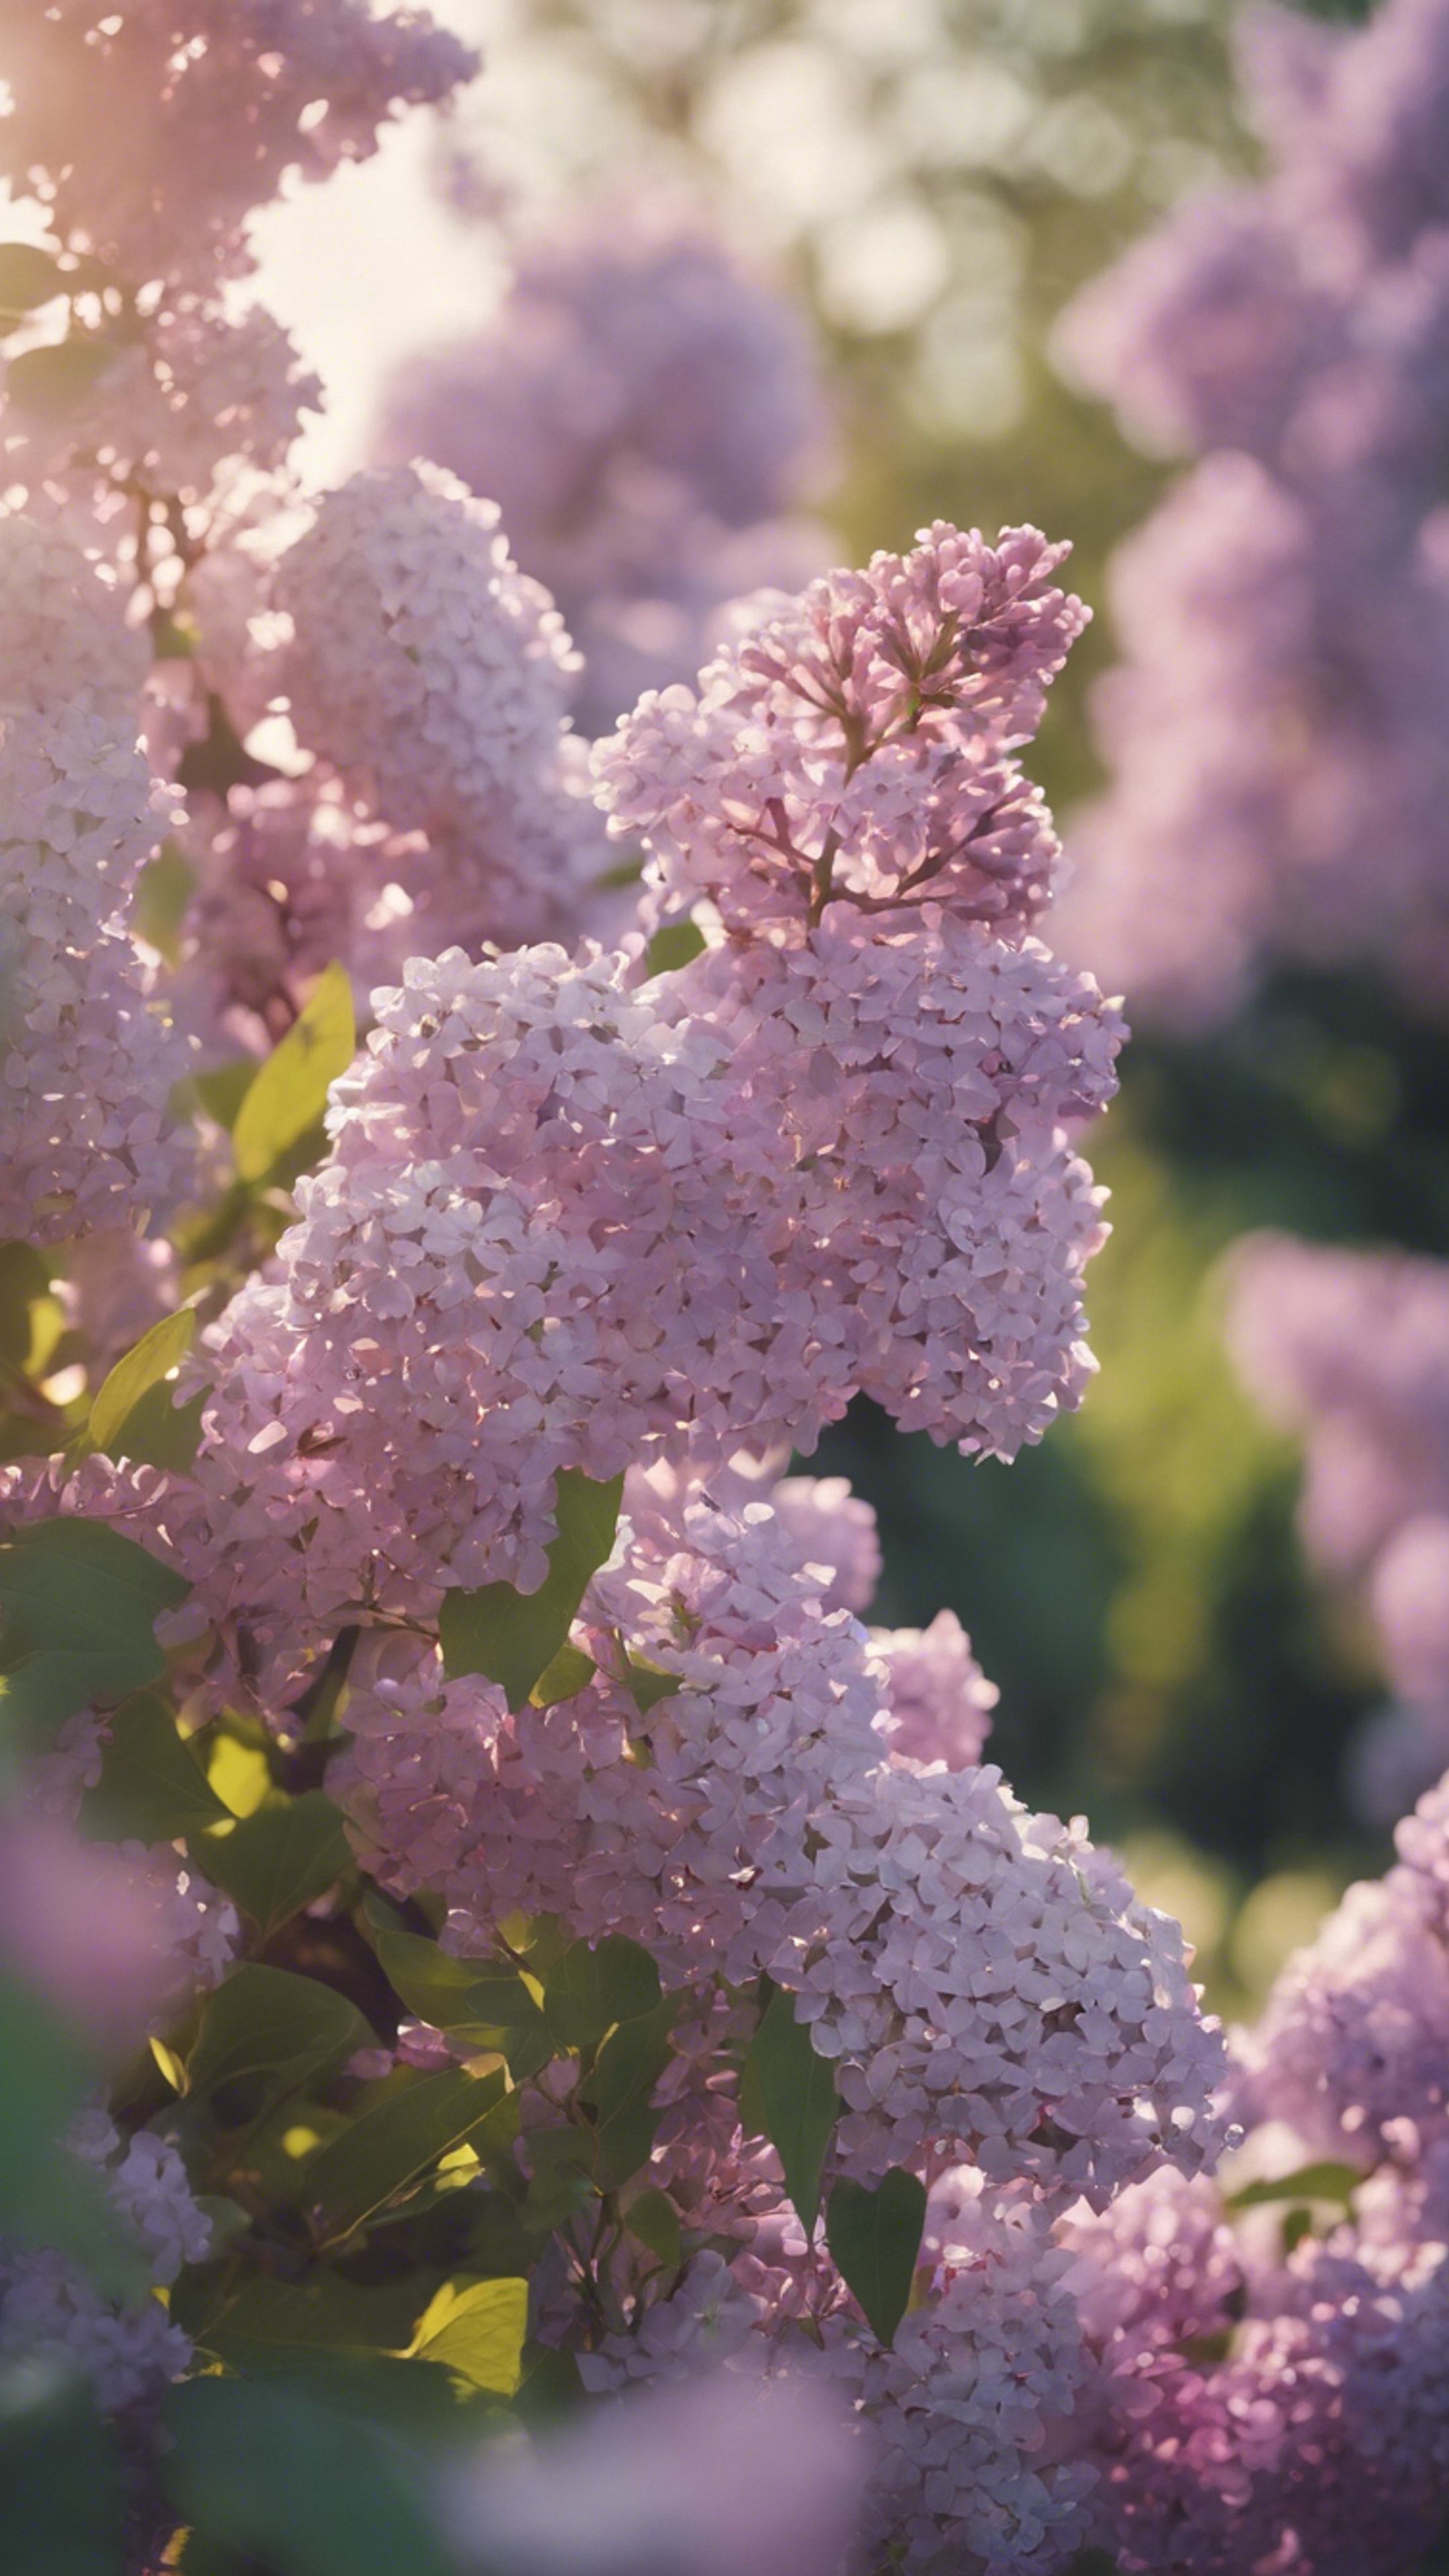 A bountiful garden full of preppy lilac flowers in full bloom under soft sunlight. Tapeta[535239431e6946dc9128]